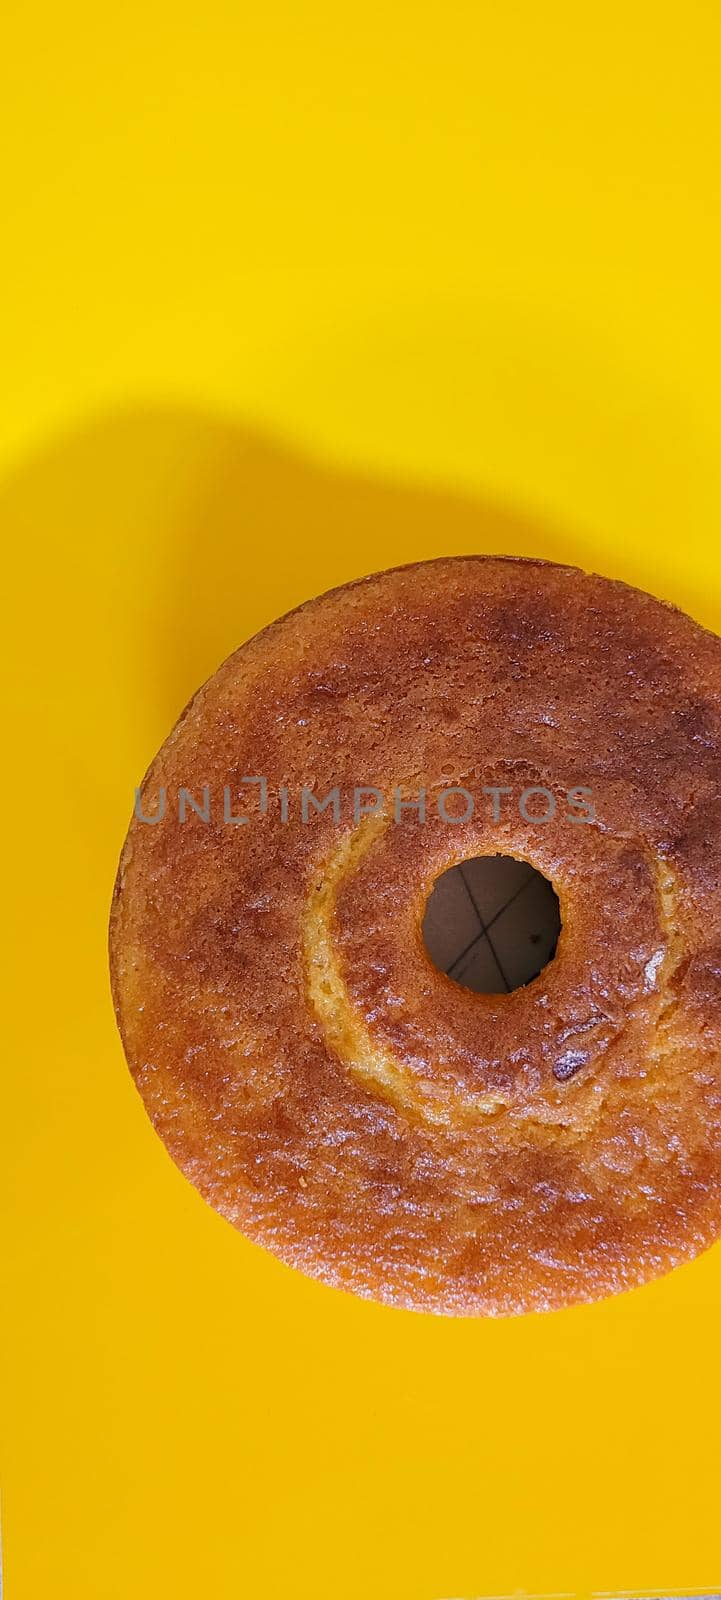 fuba cake with creamy guava, Brazilian with yellow background